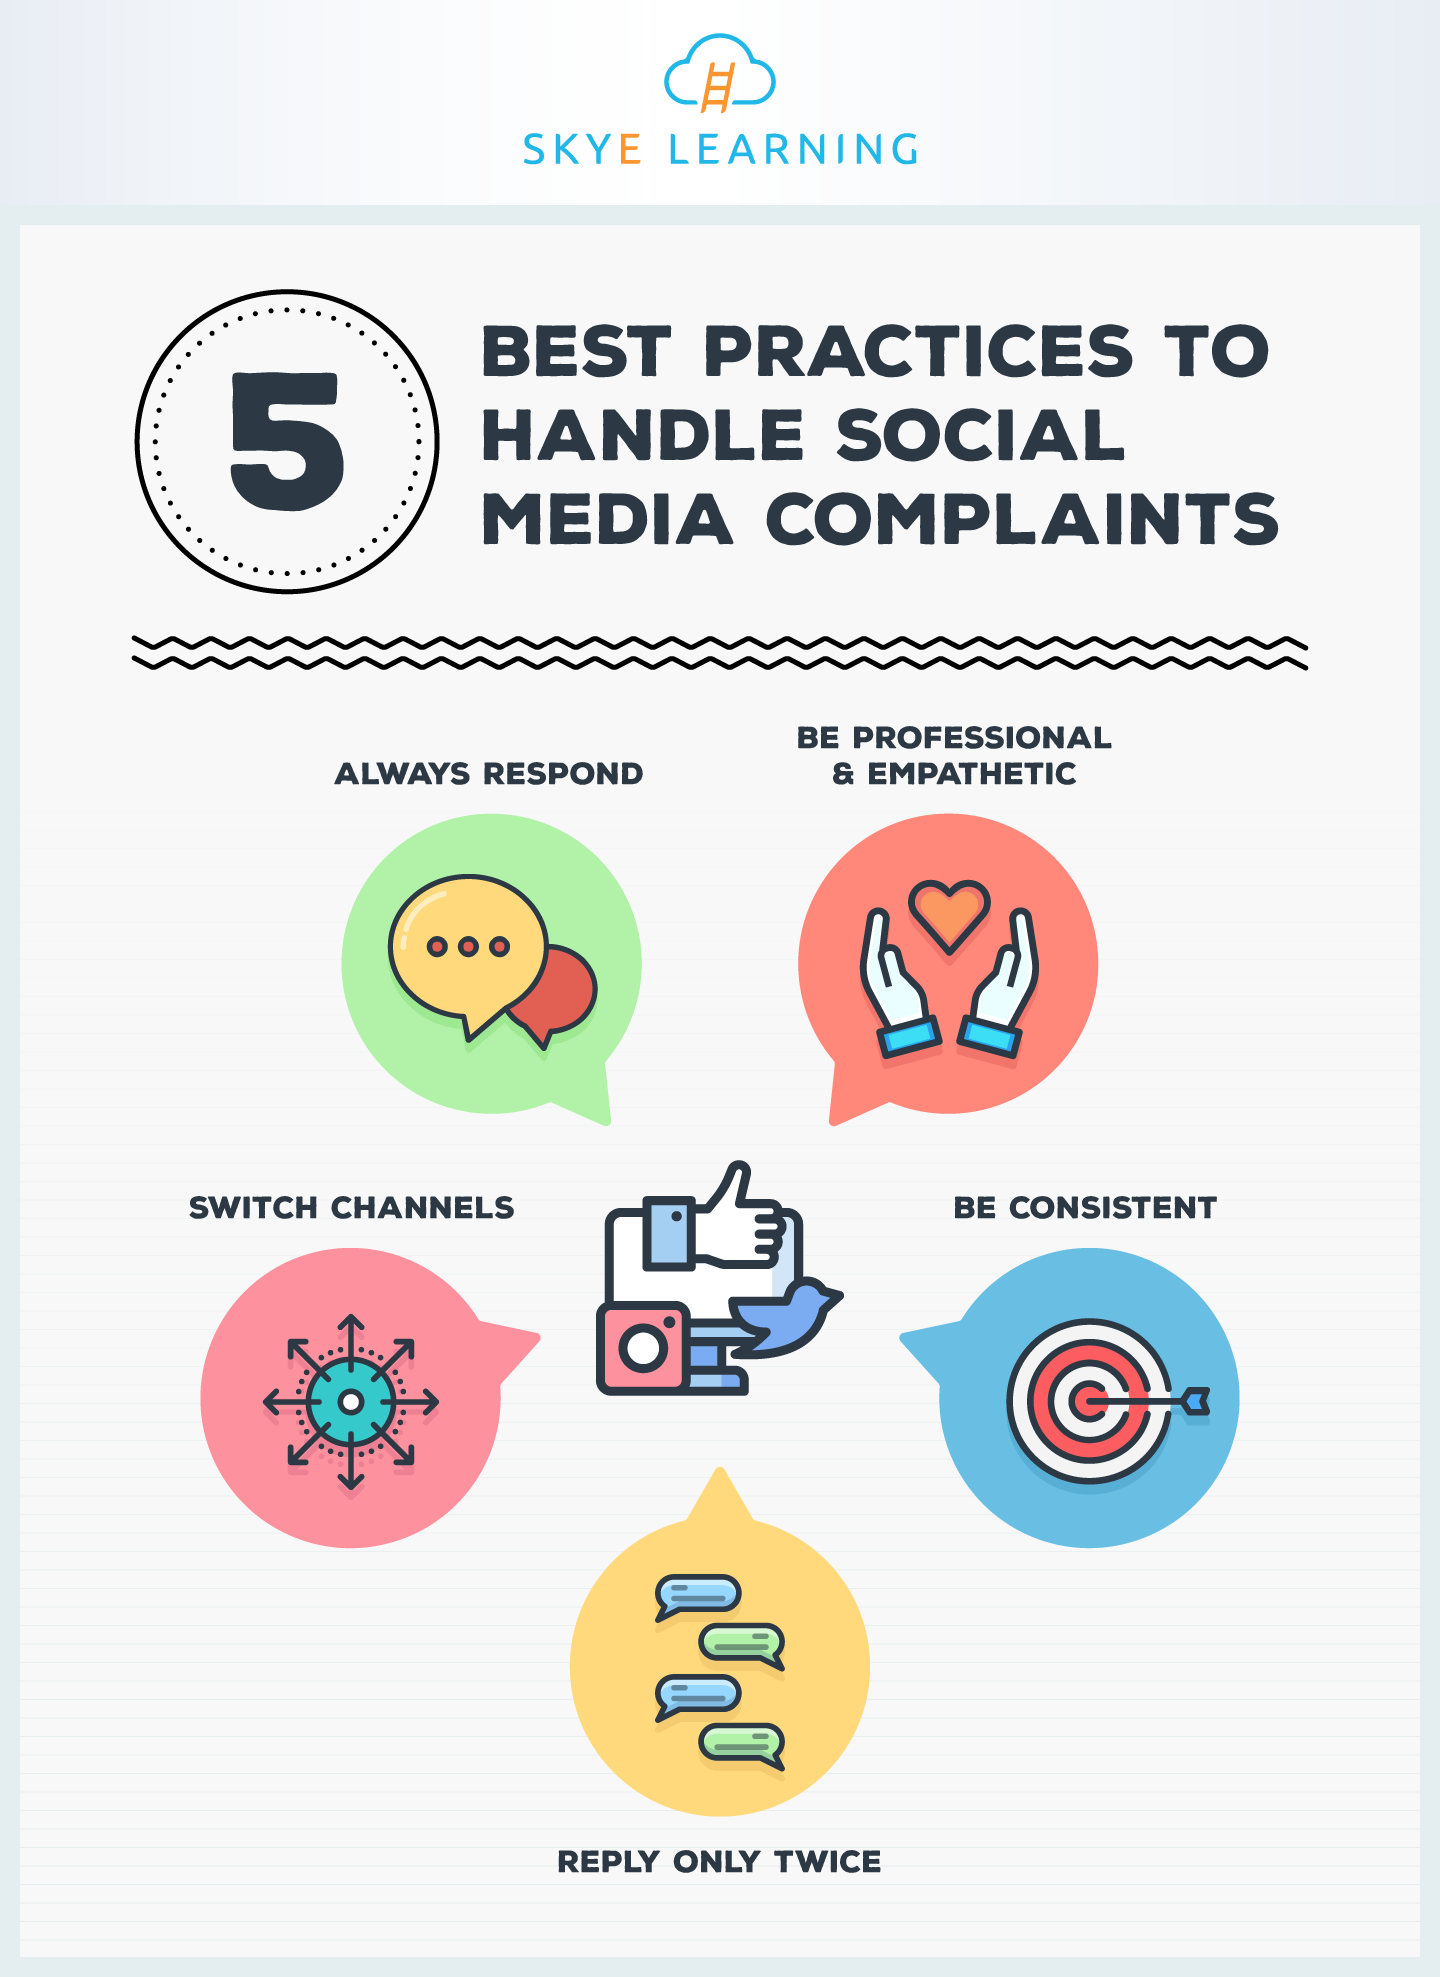 5 Best Practices to Handle Social Media Complaints